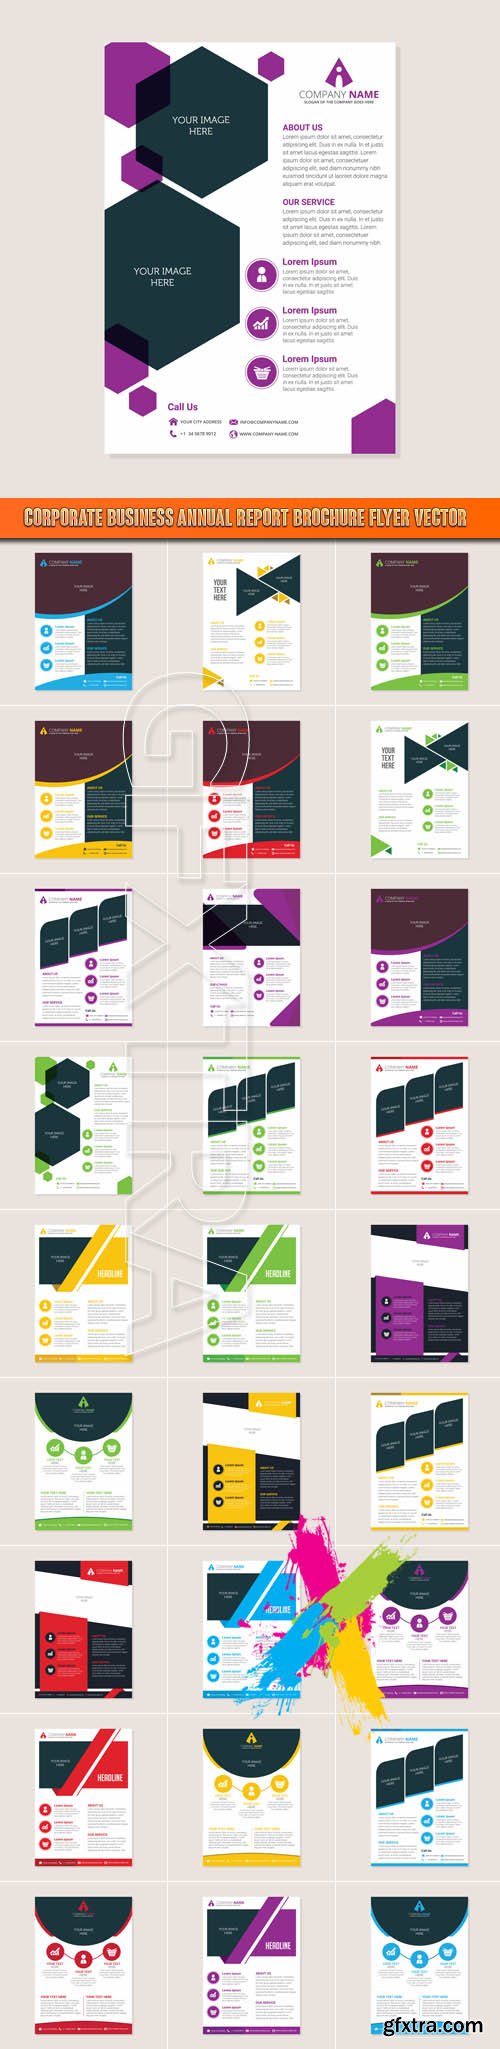 Corporate business annual report brochure flyer vector